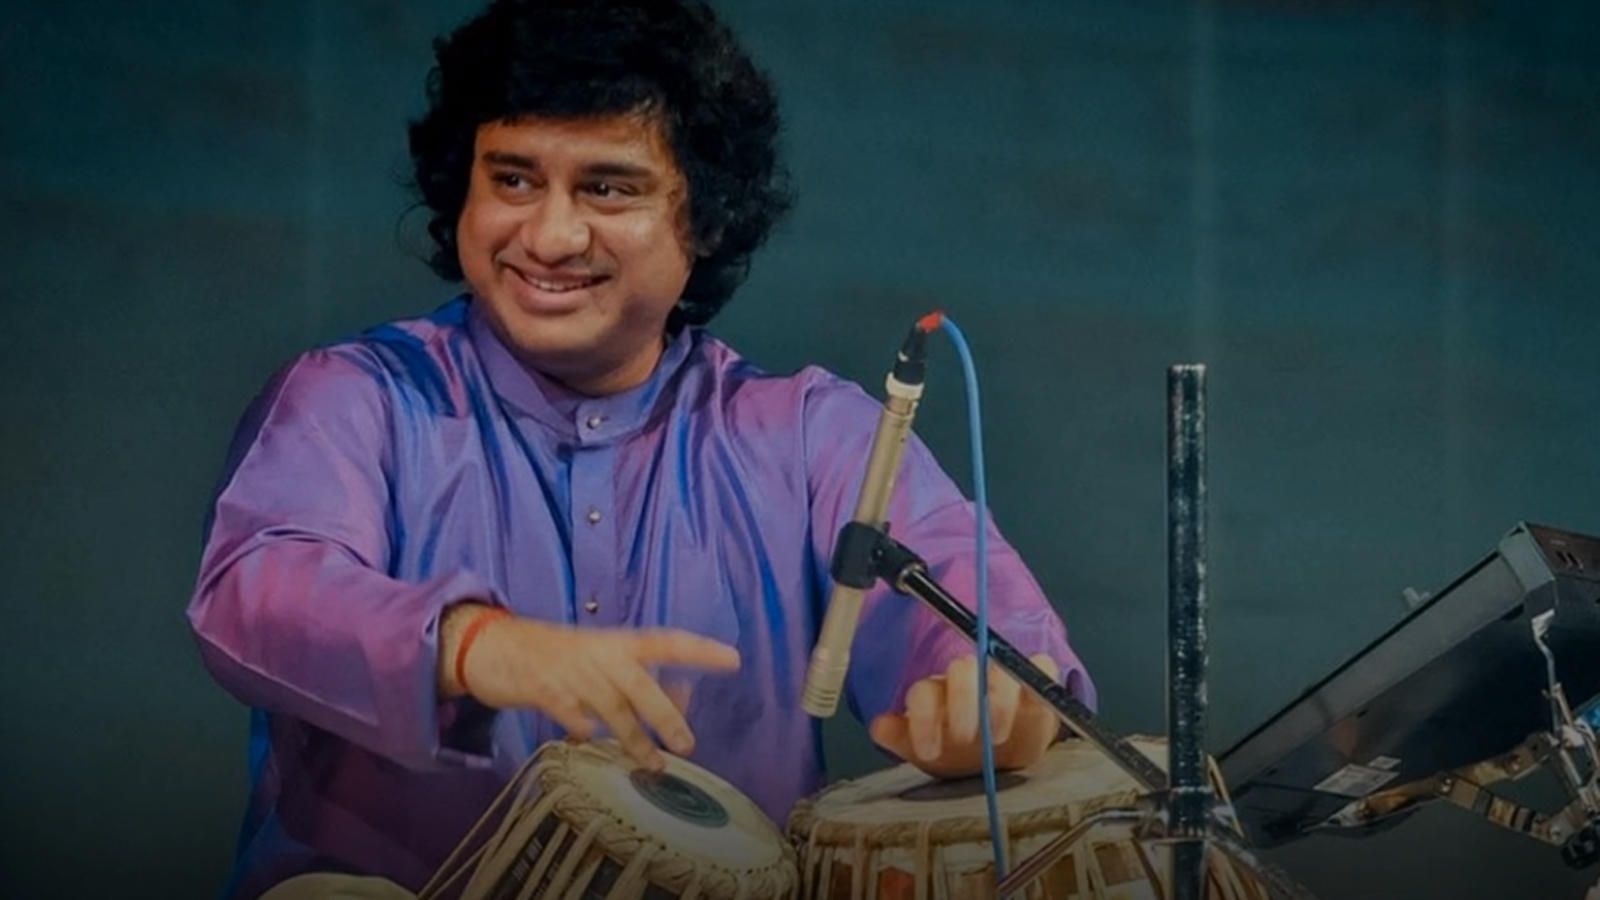 Tabla player Aditya Kalyanpur talks about his mentor, maestro Zakir Hussain. Hindi Video Songs of India